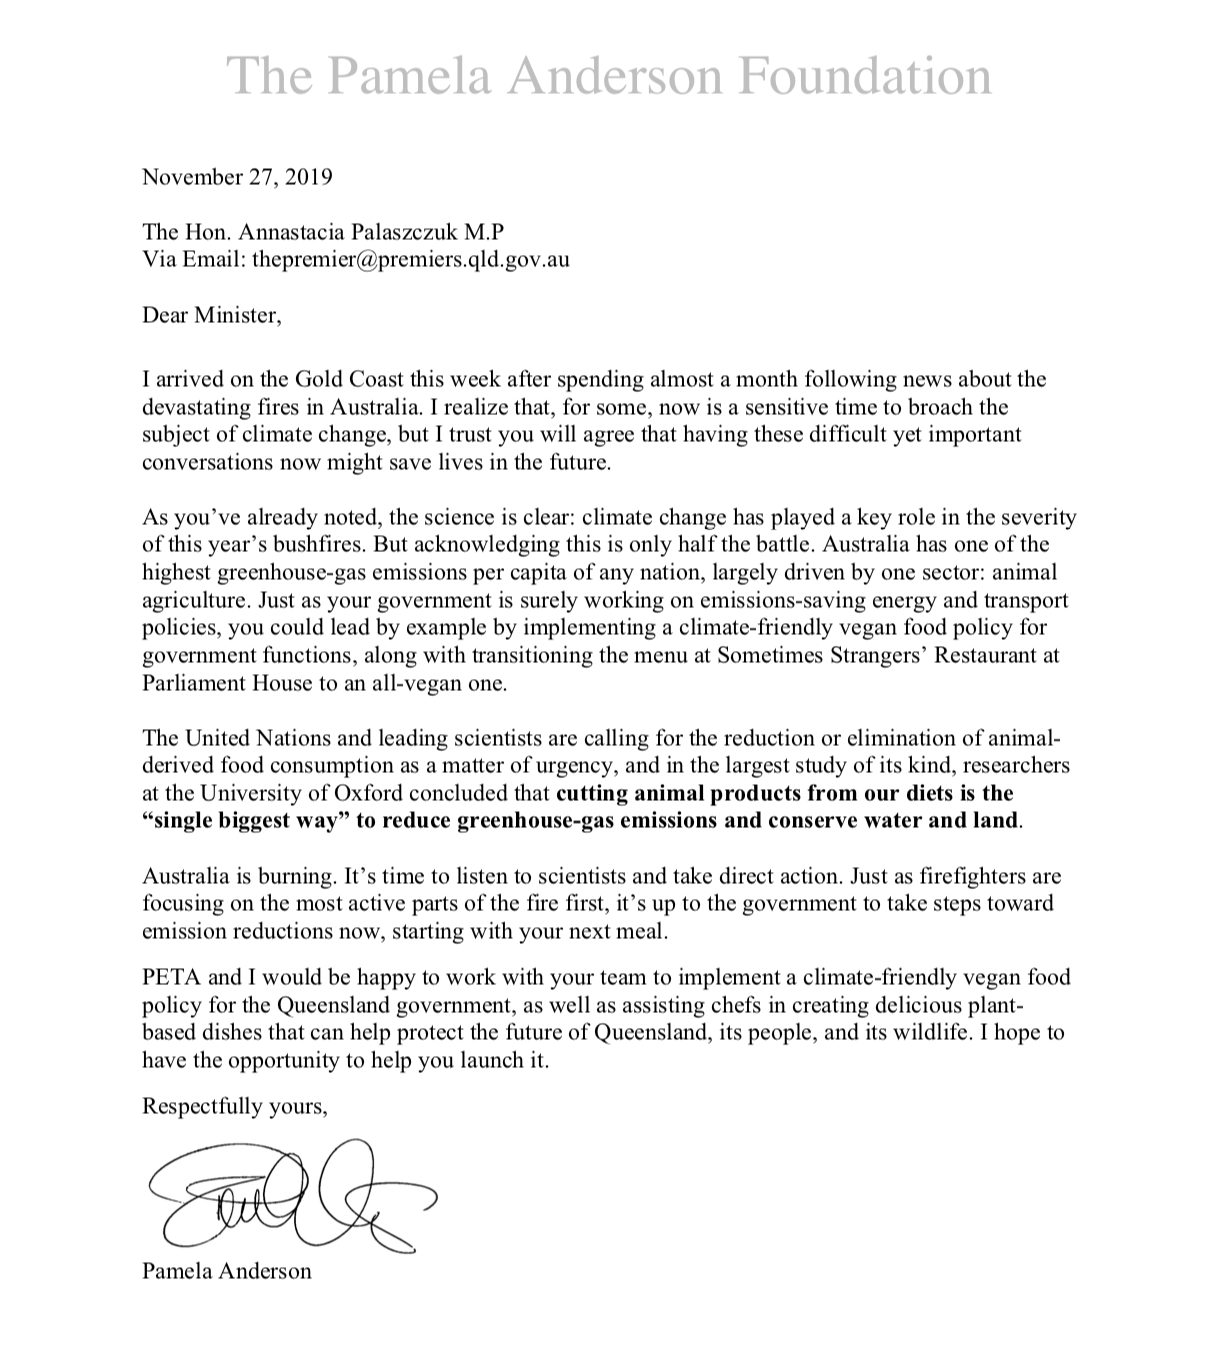 Pamela Anderson's letter to the Queensland Premier.